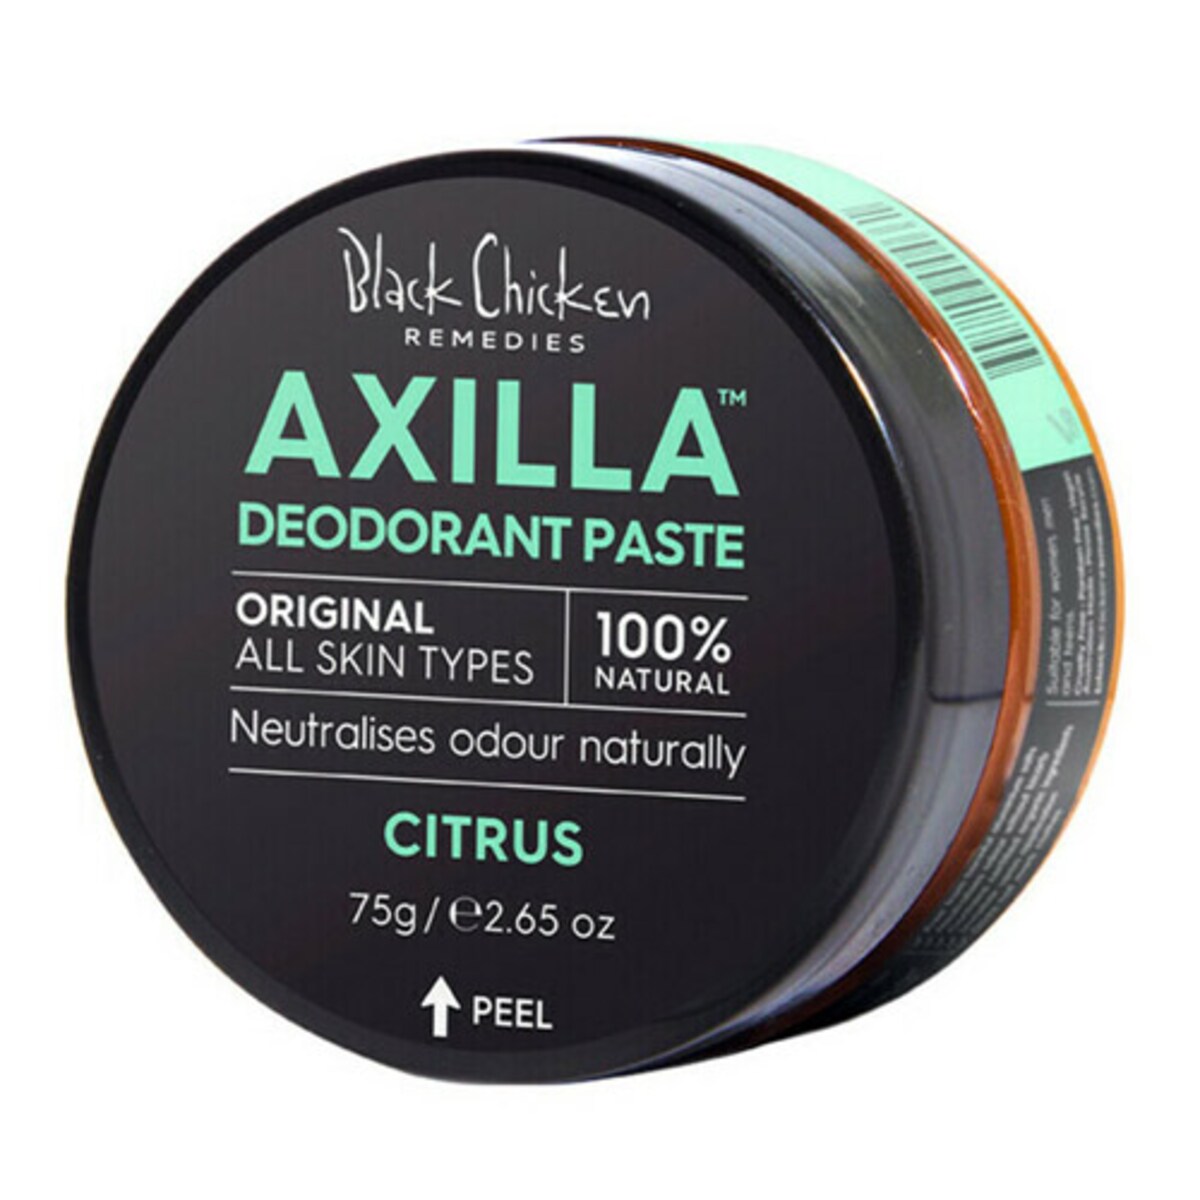 Black Chicken Remedies Axilla Natural Deodorant Paste Original Citrus 75g